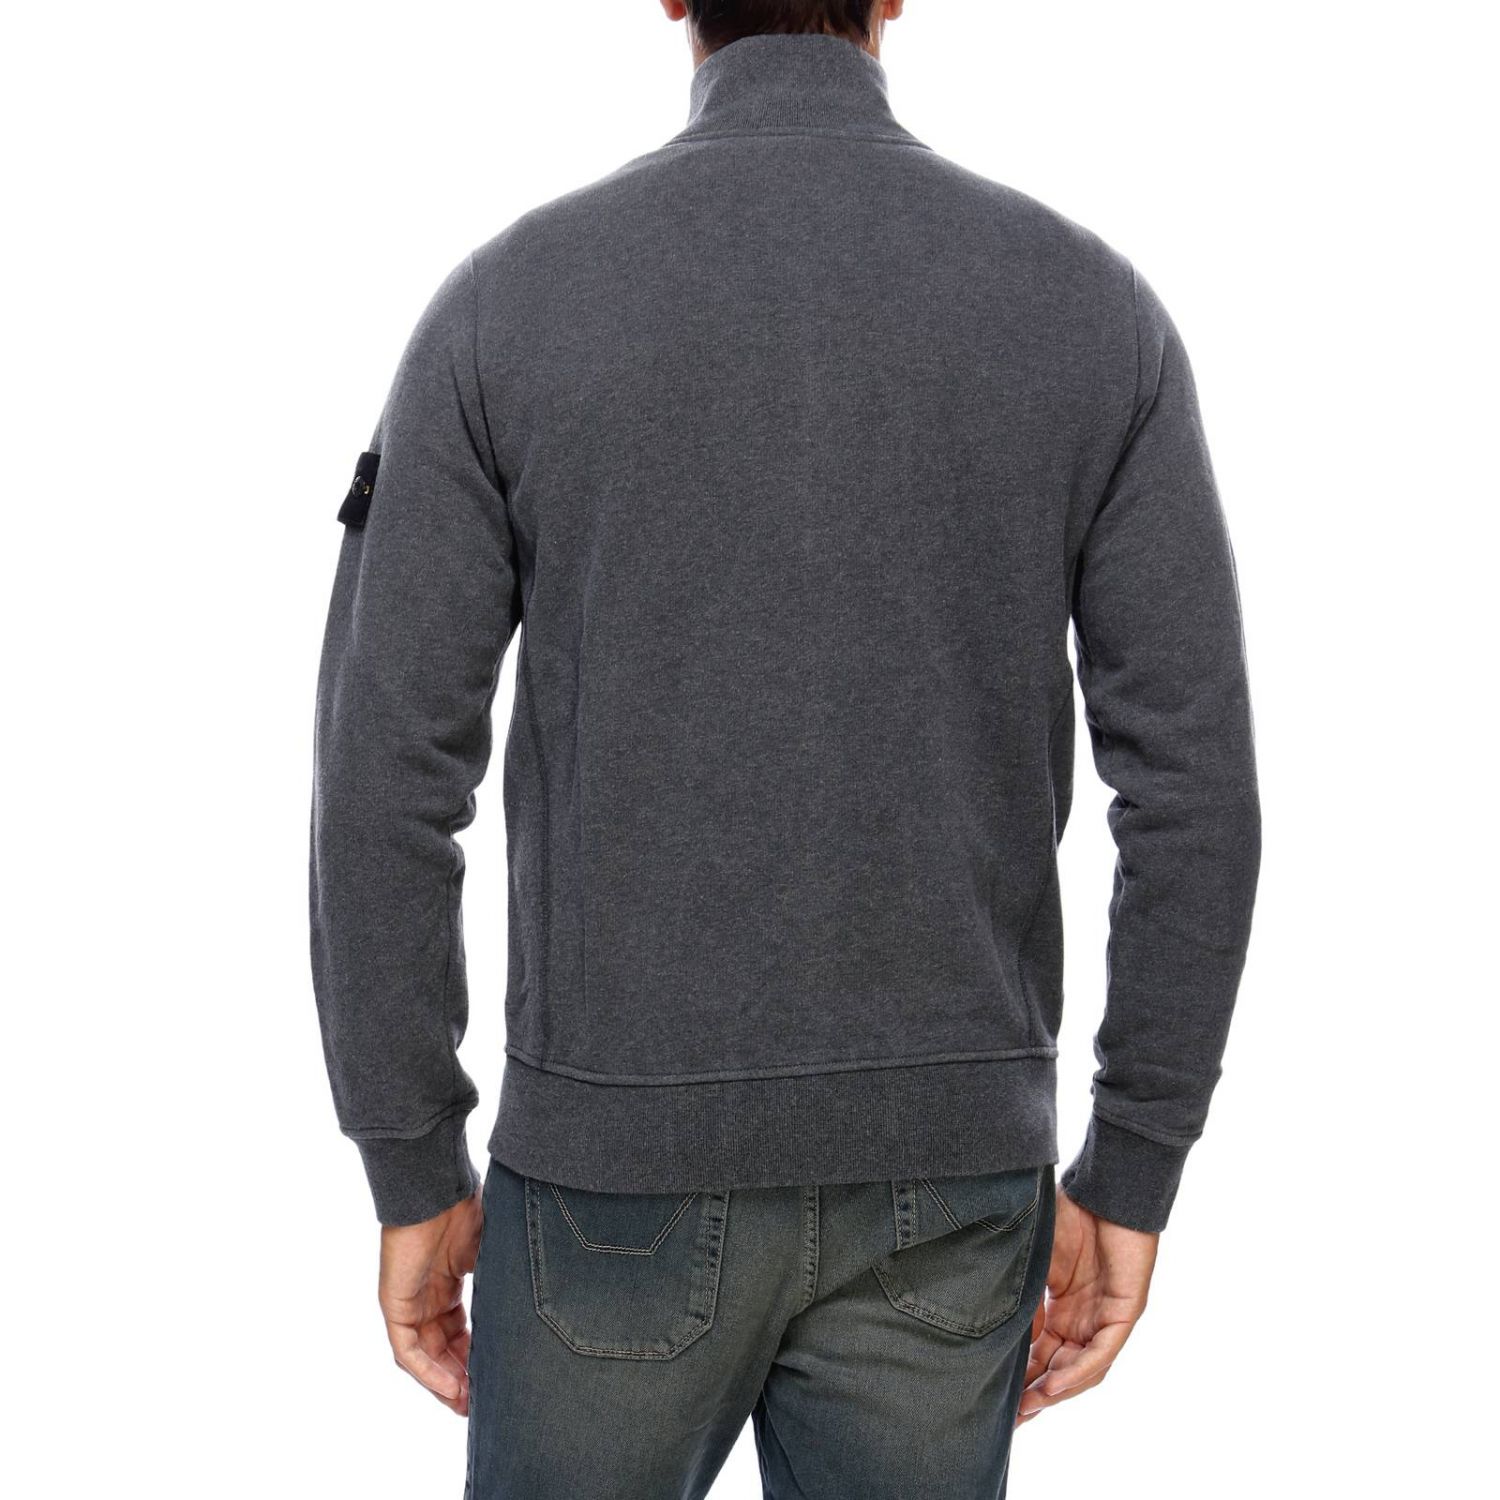 Stone Island Outlet: Sweater men - Smoke Grey | Sweatshirt Stone Island ...